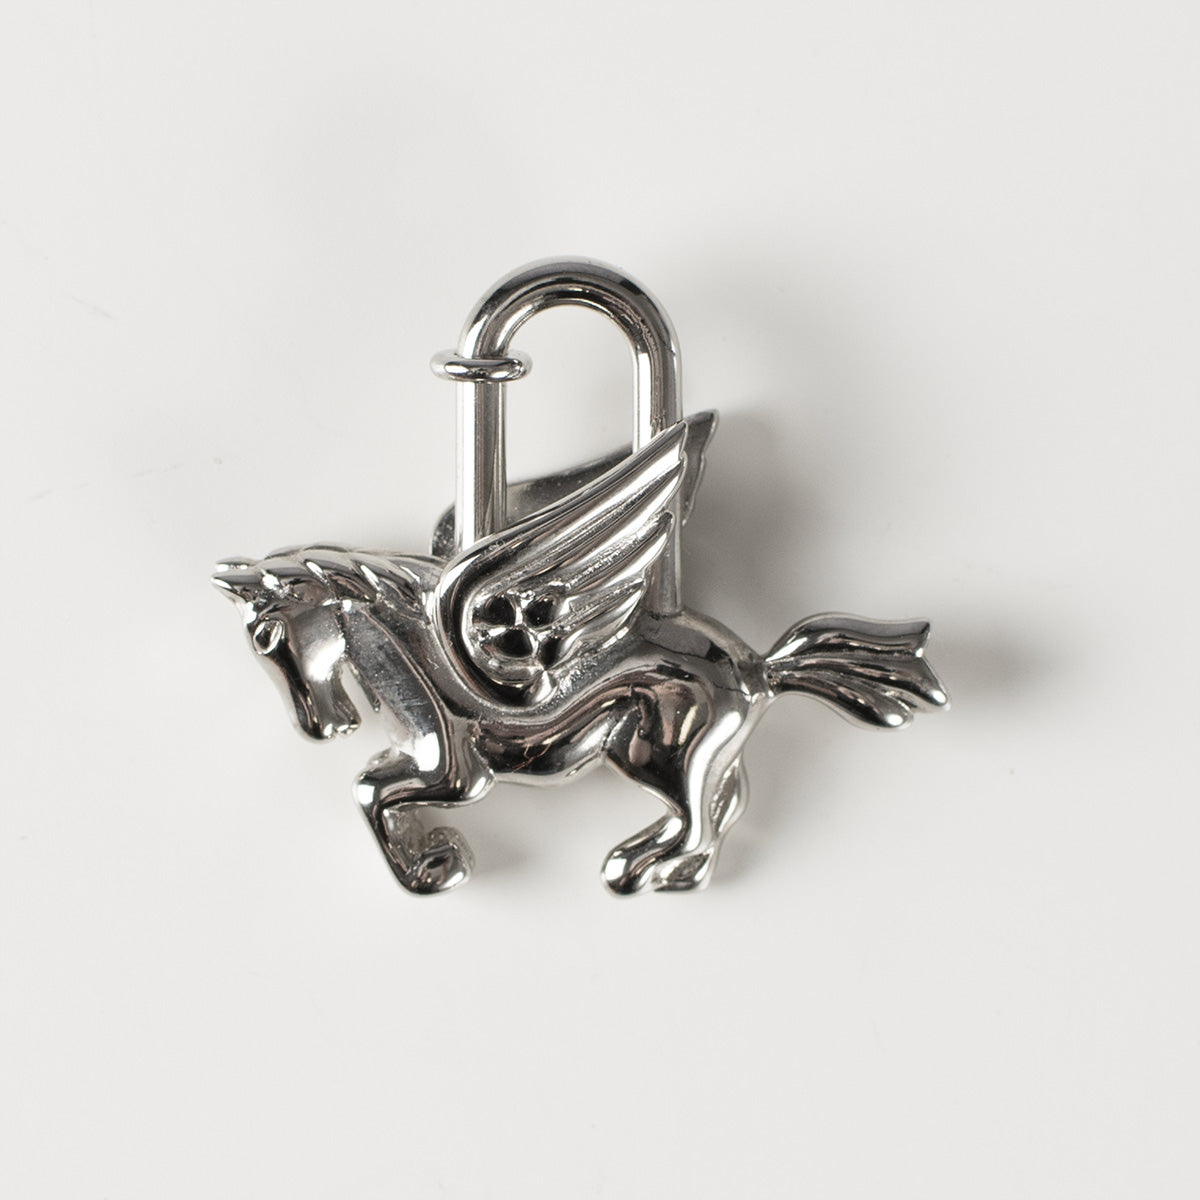 Hermès Pegasus Cadena Lock Charm